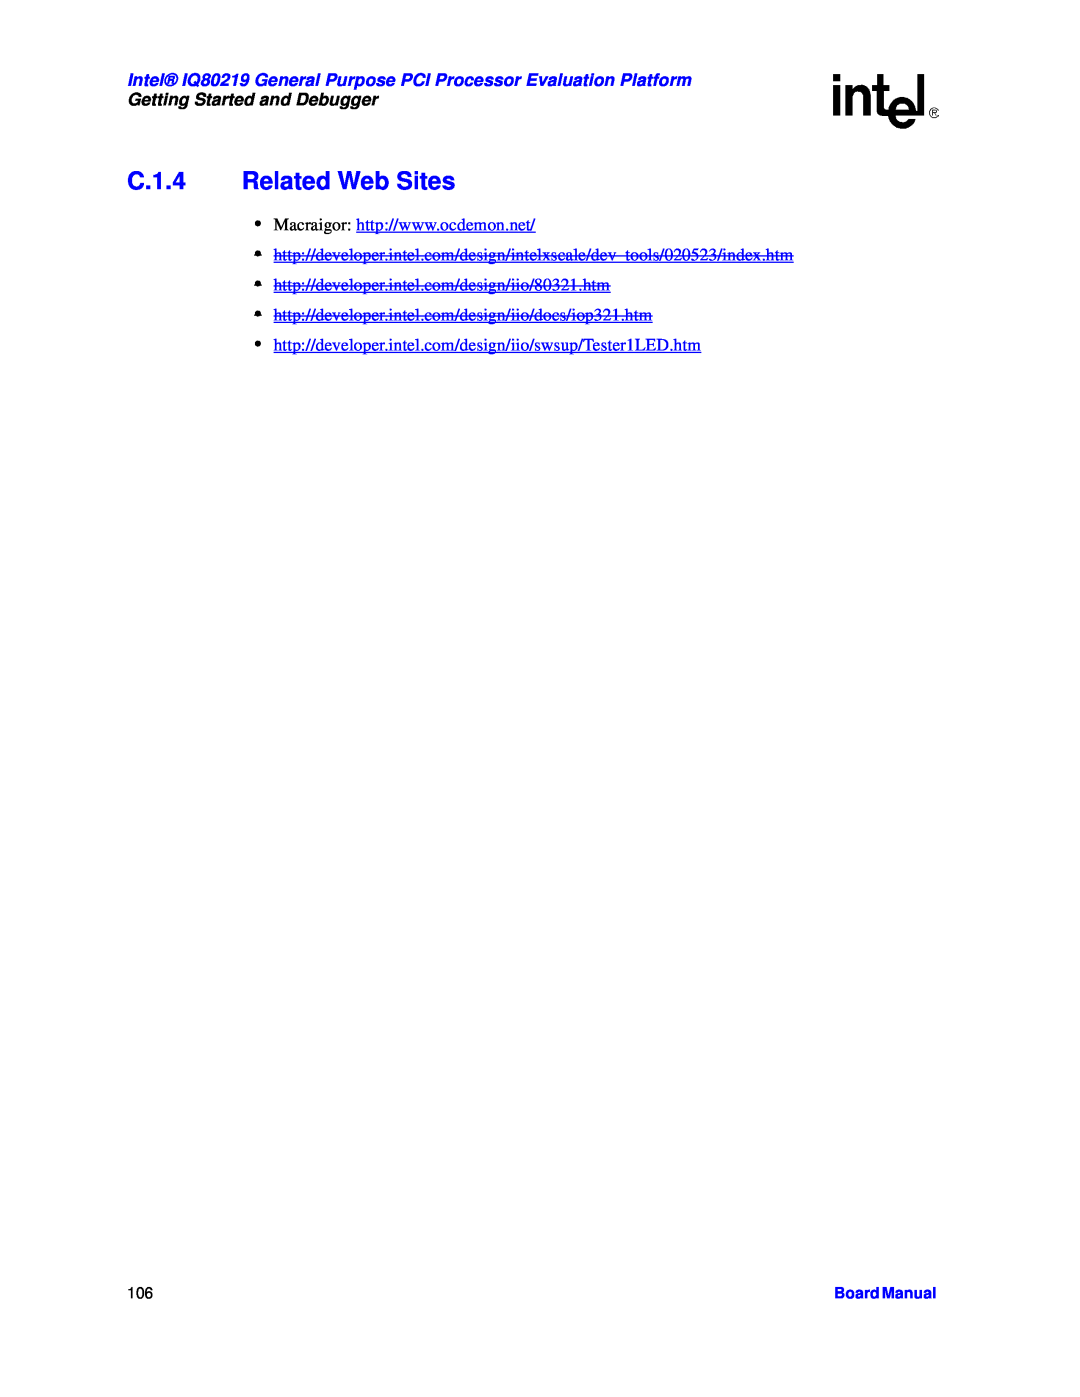 Intel IQ80219 manual C.1.4 Related Web Sites, Board Manual 